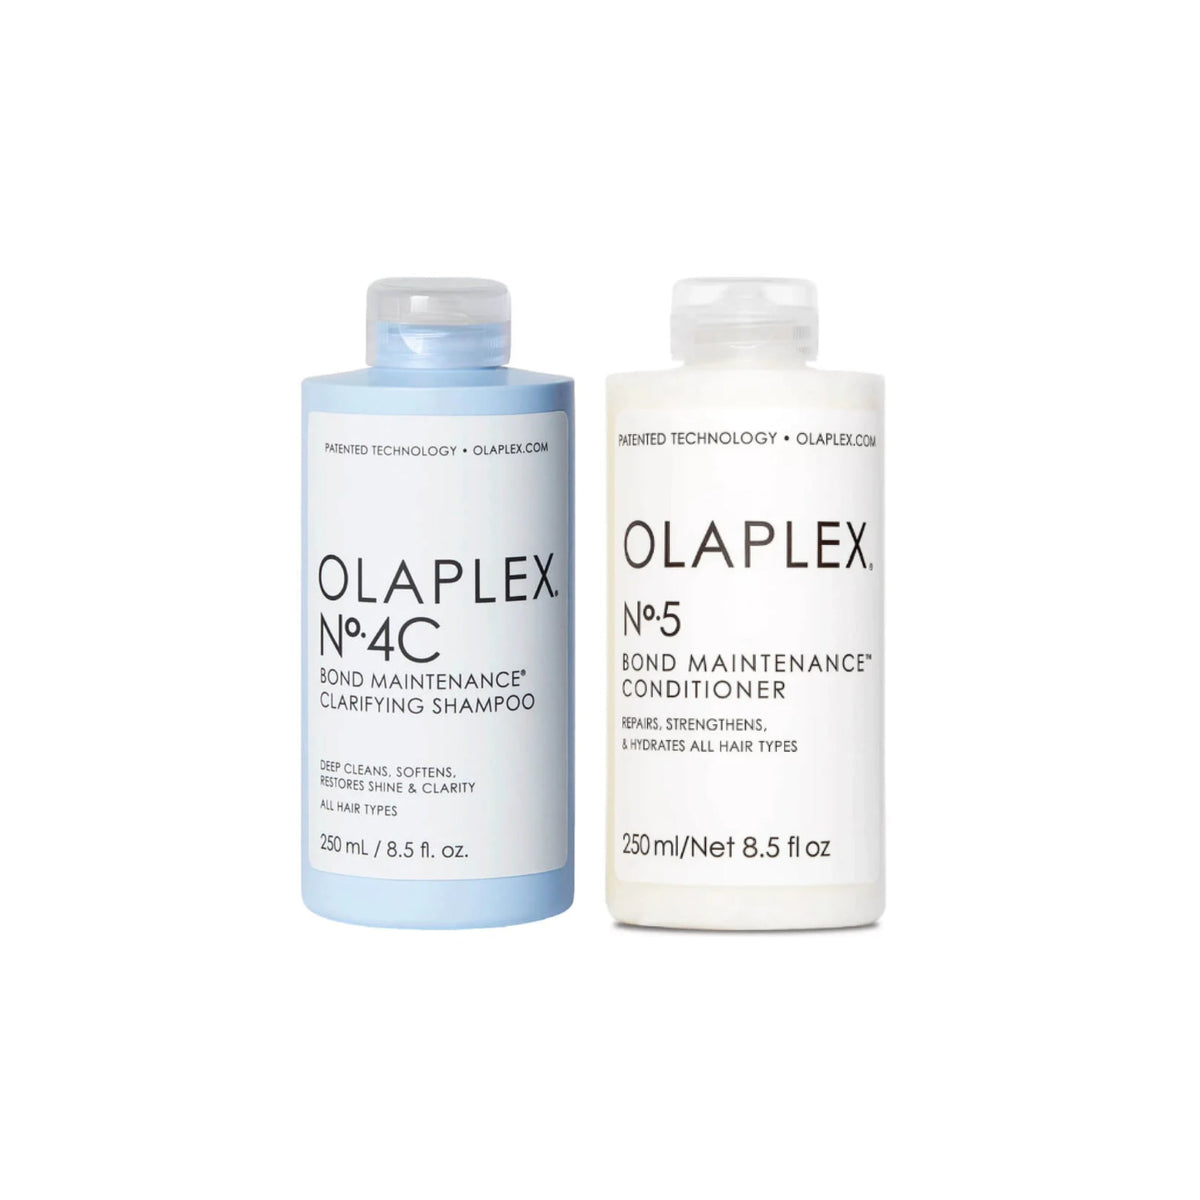 Olaplex No.4C Clarifying Shampoo and No.5 Conditioner 250ml Duo - Haircare Superstore